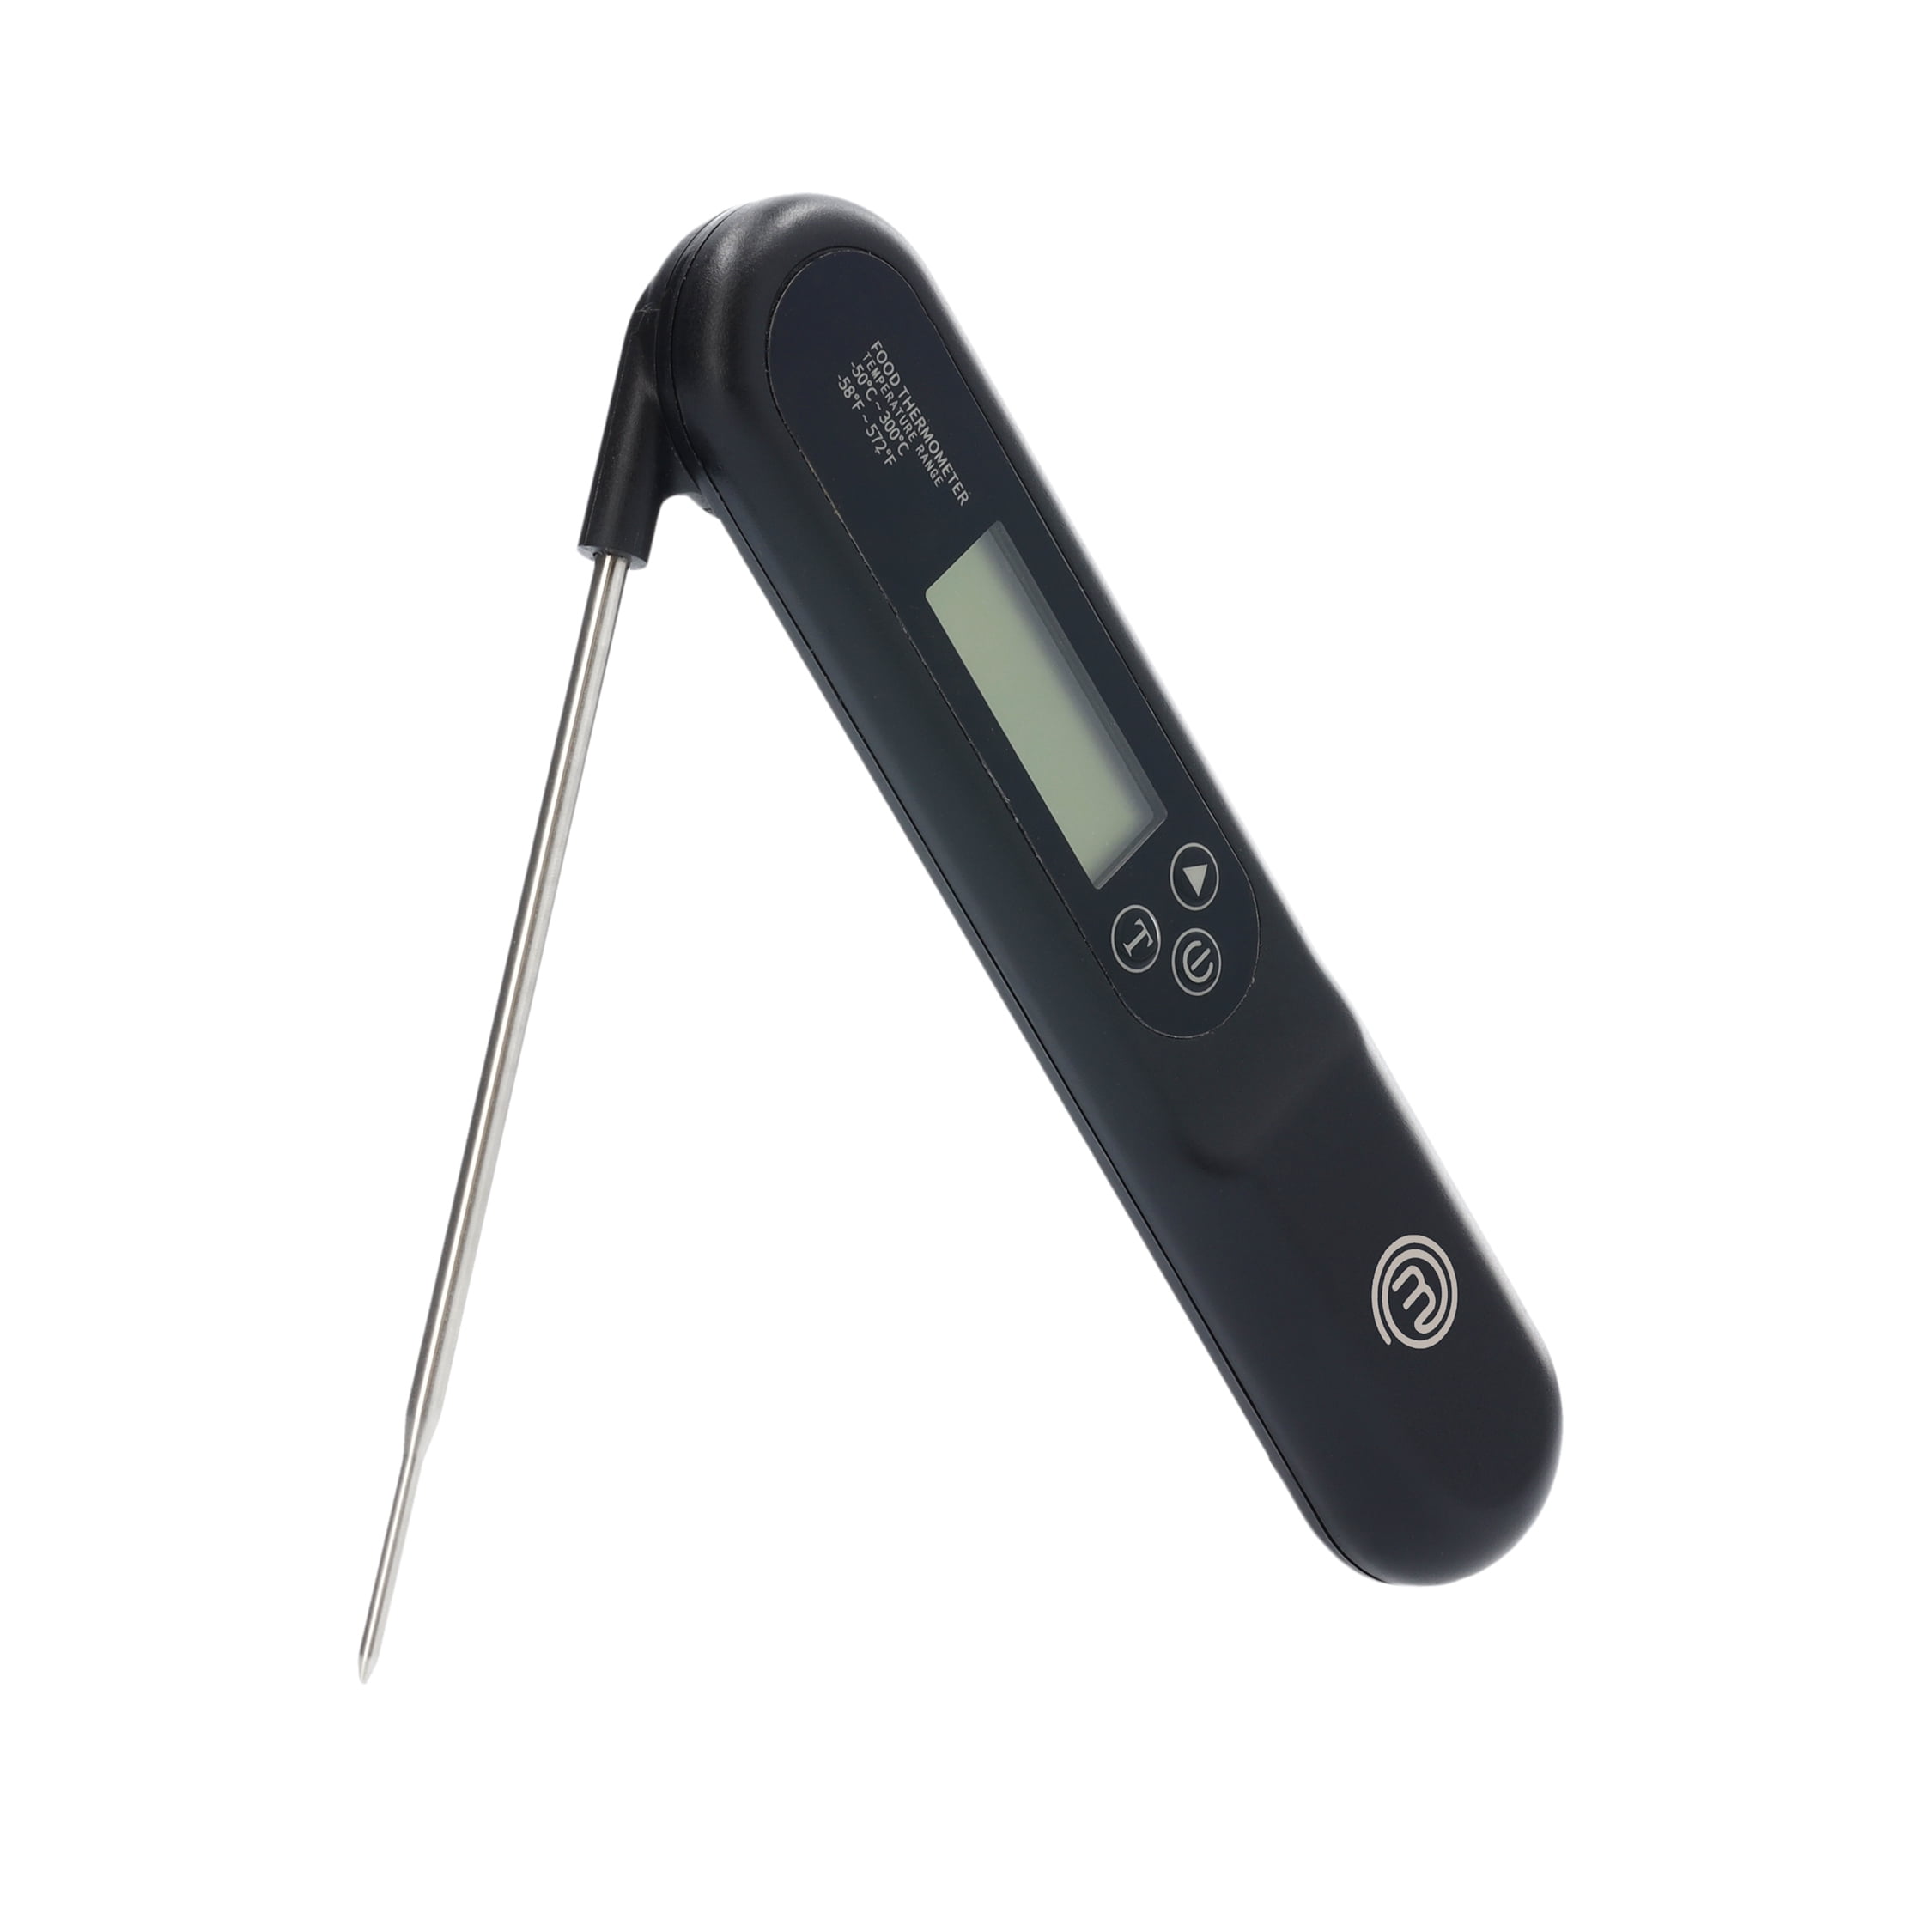 Meater Wireless Meat Thermometer on Kickstarter - DadCooksDinner